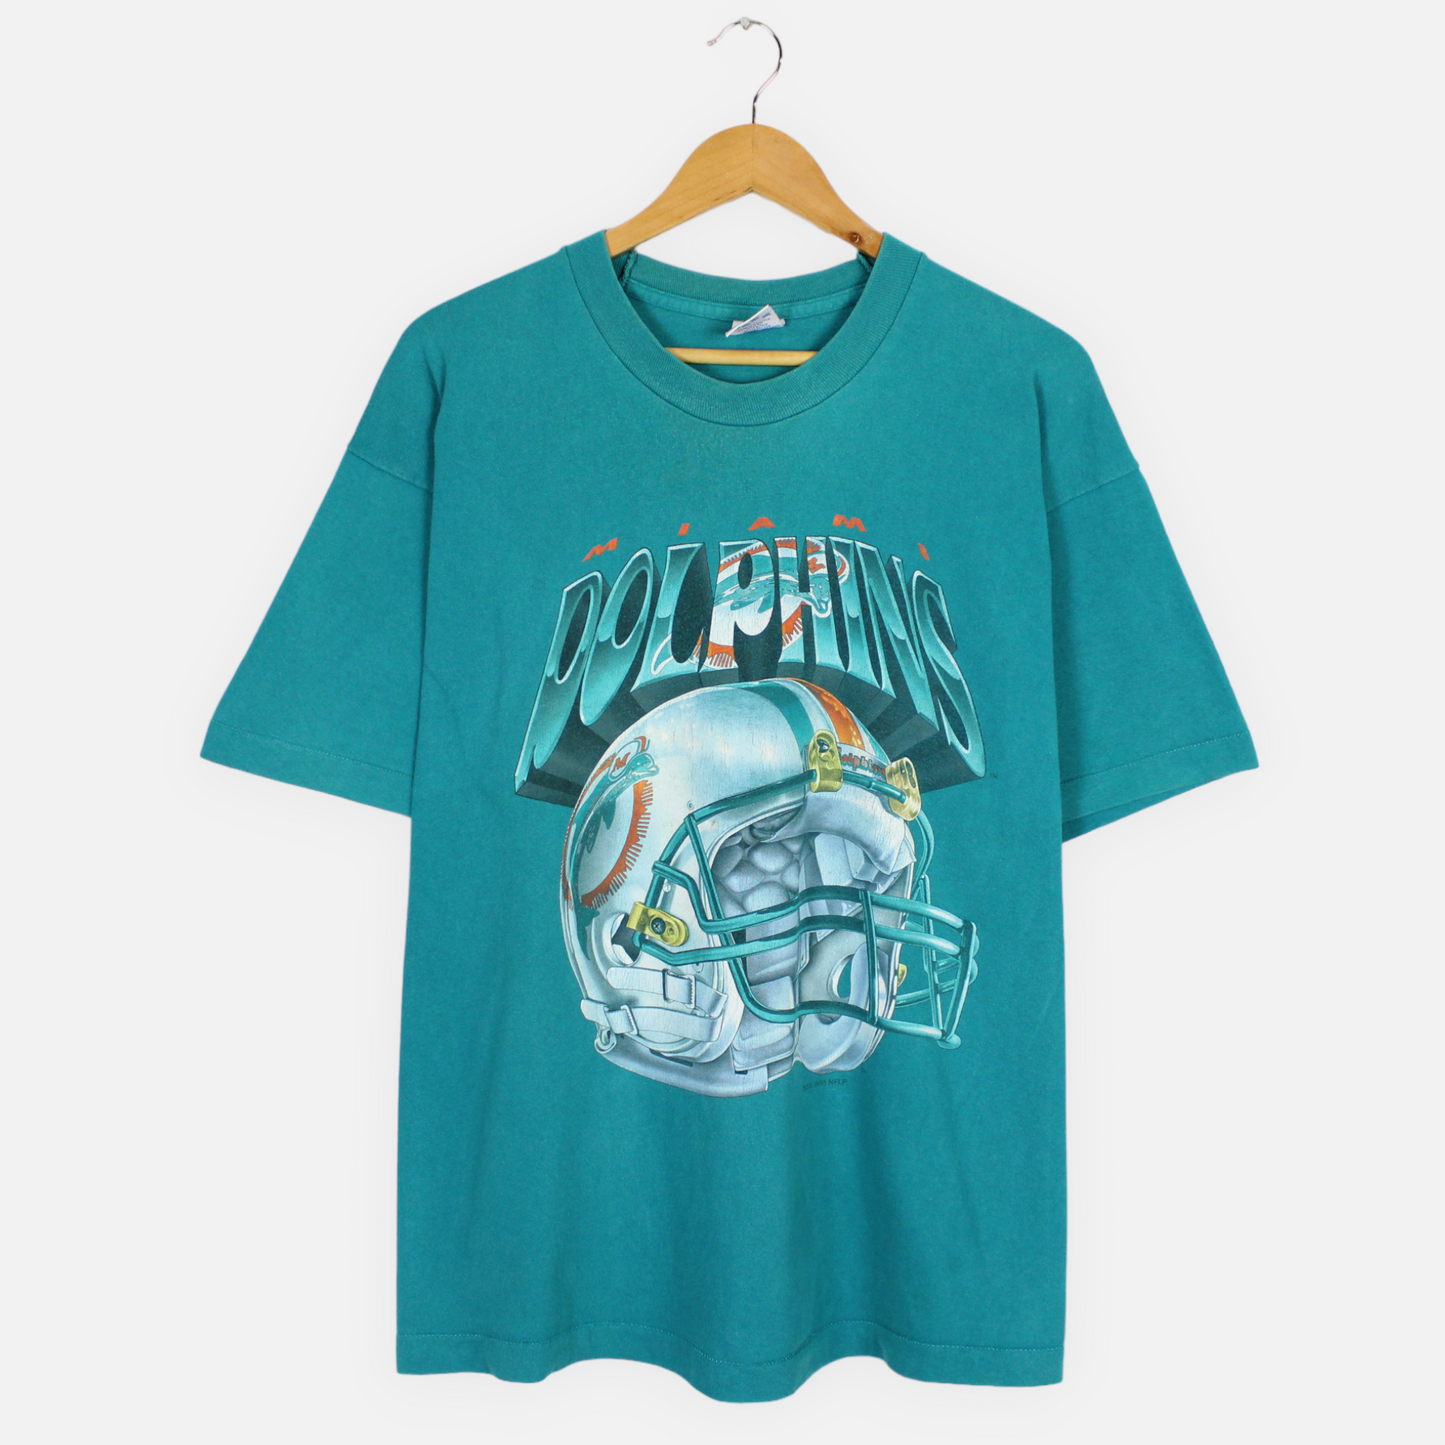 Vintage 1995 Miami Dolphins NFL Tee - L